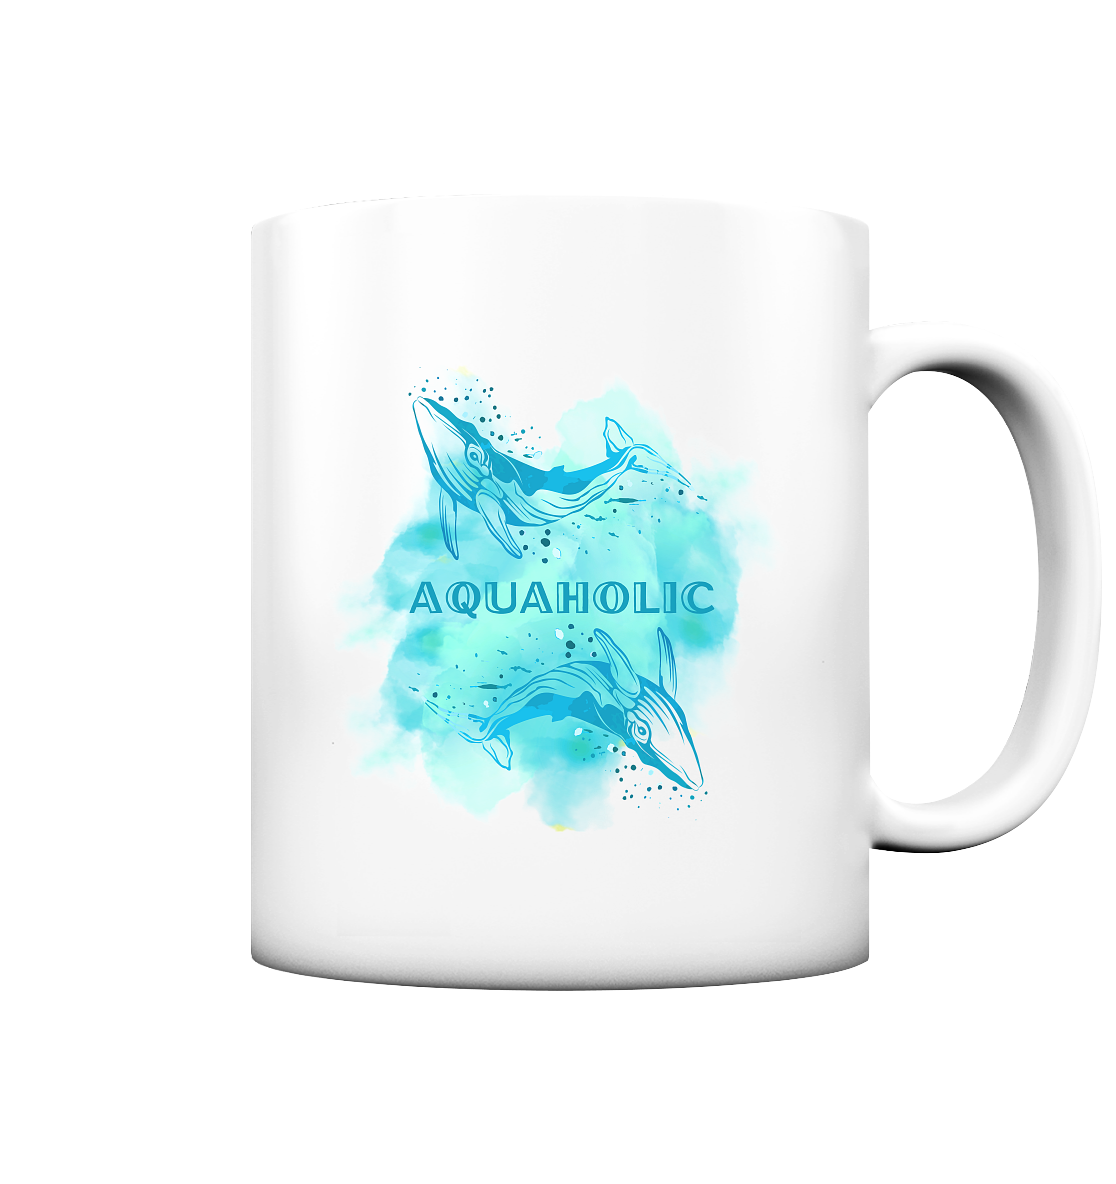 Aquaholic  - Tasse matt